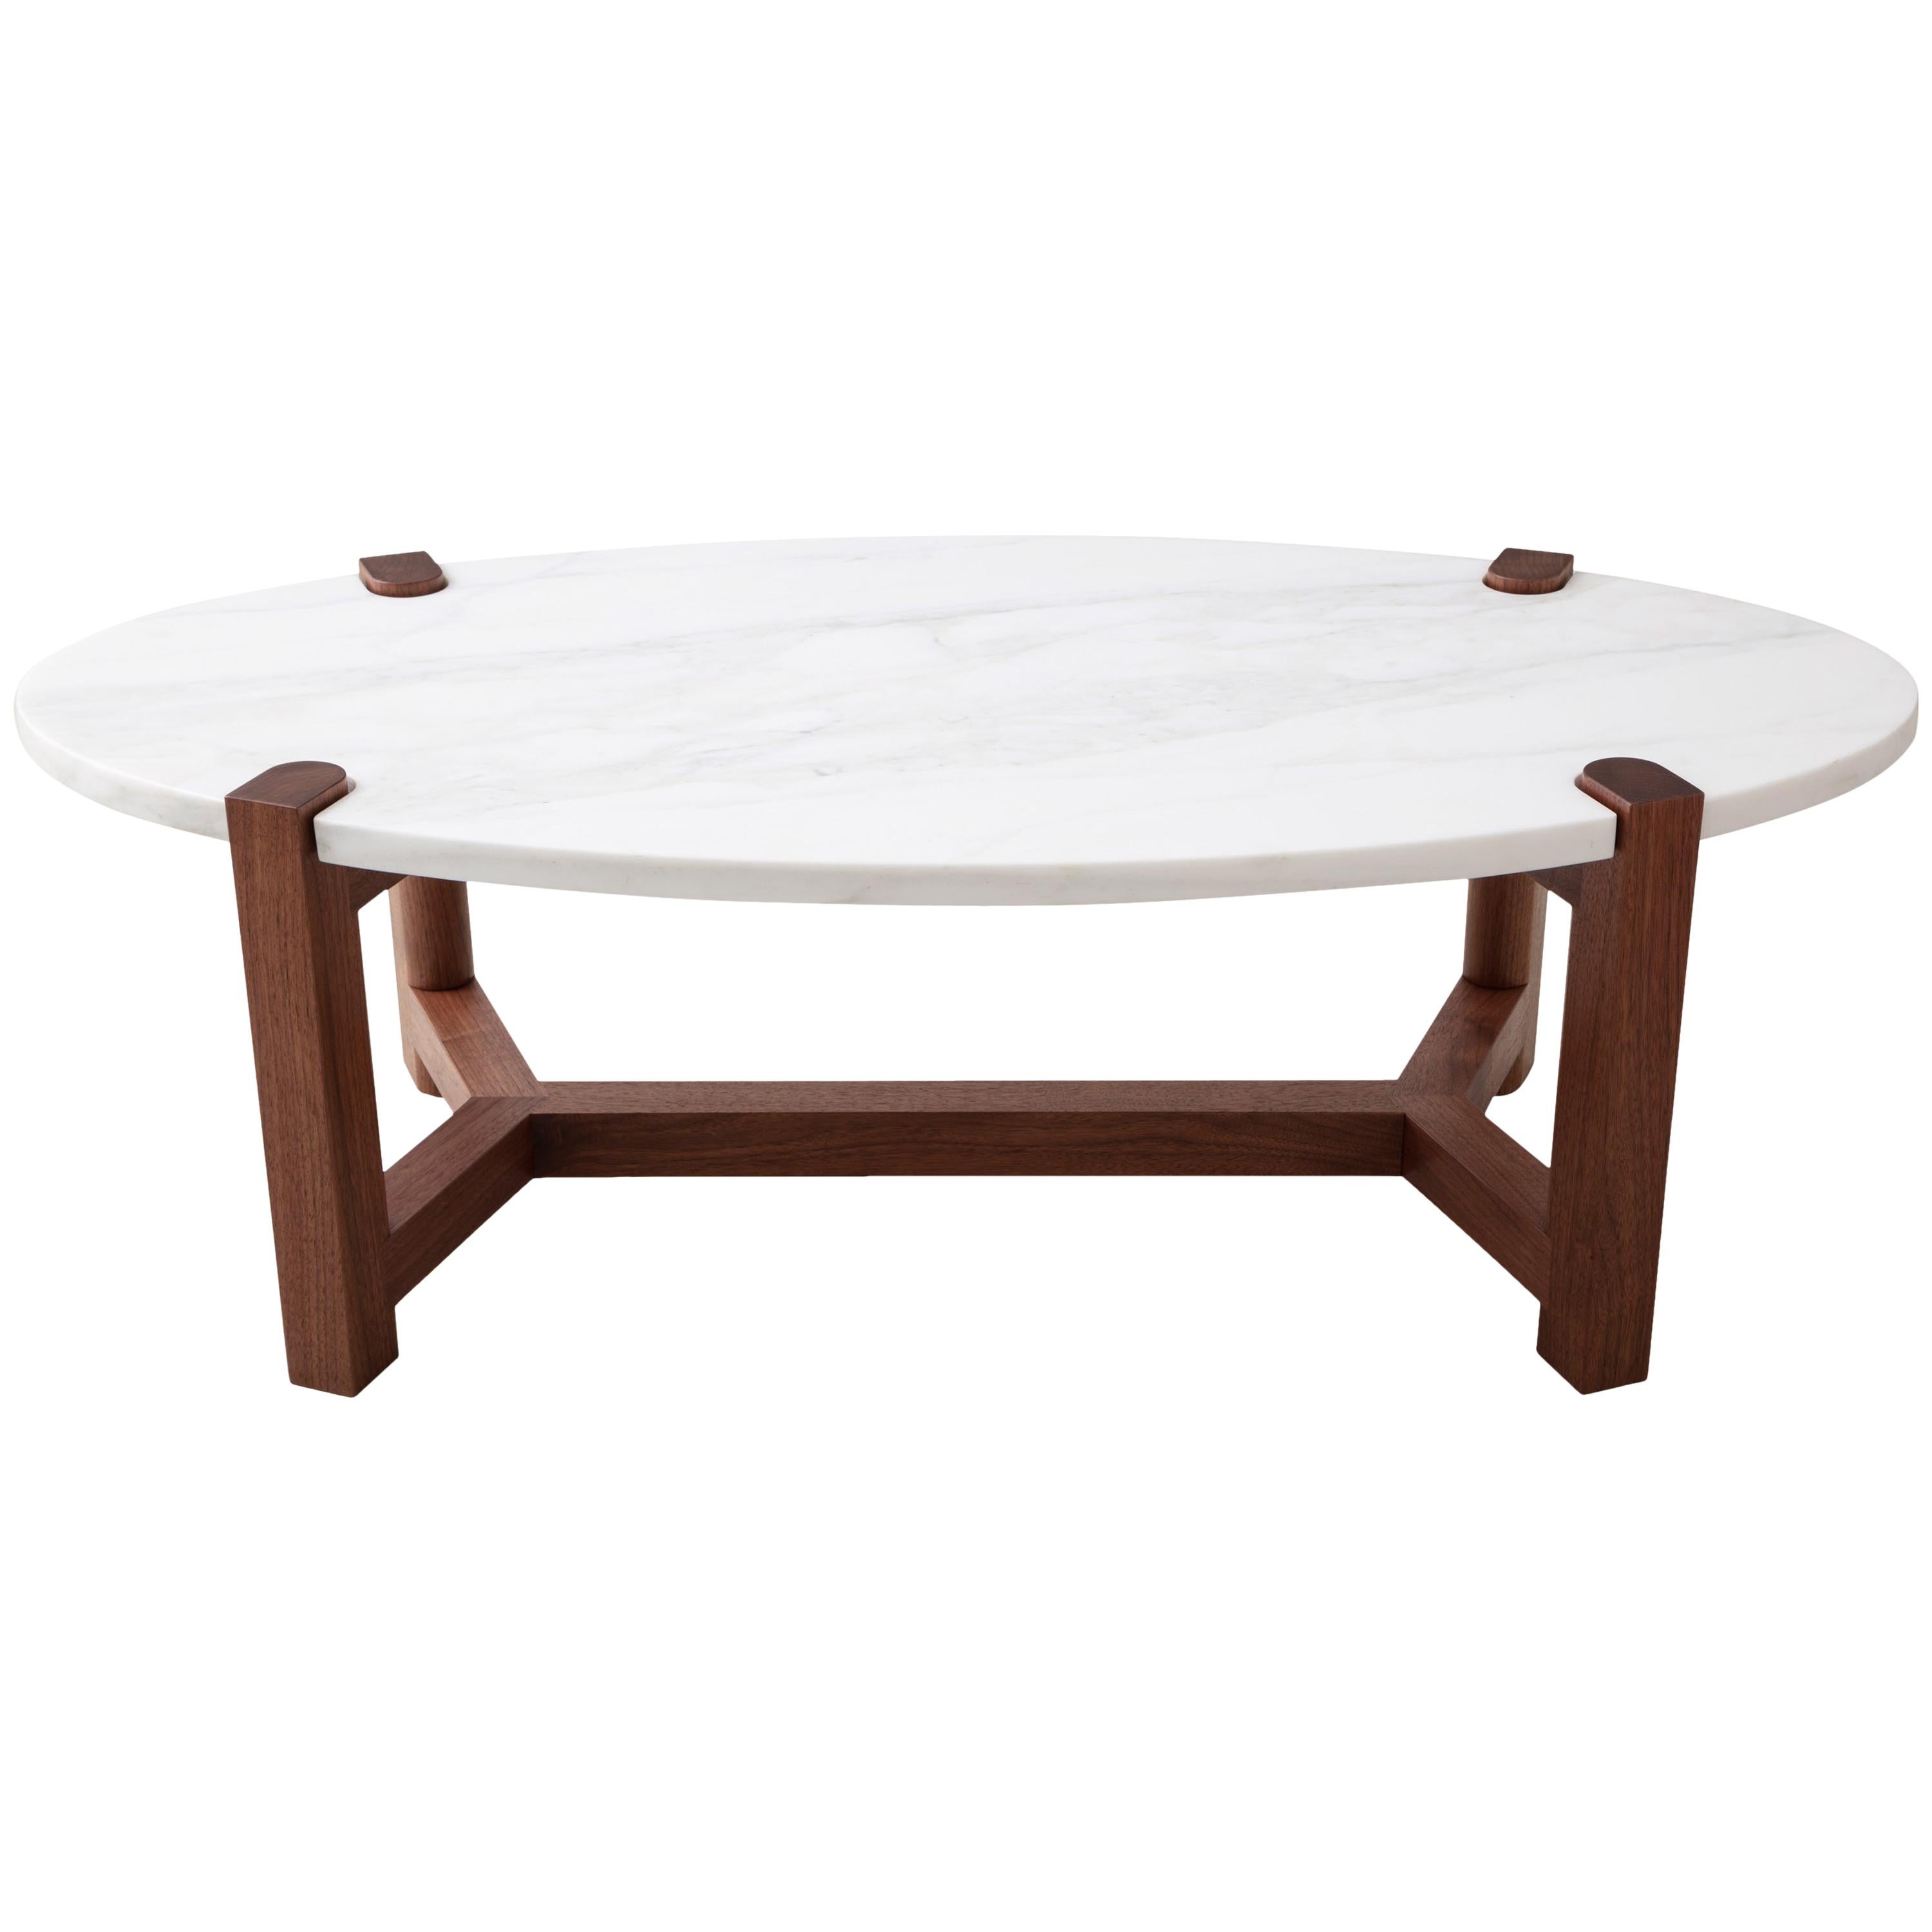 Pierce Coffee Table, Walnut, Carrara Marble or COS, Oval, Made in USA